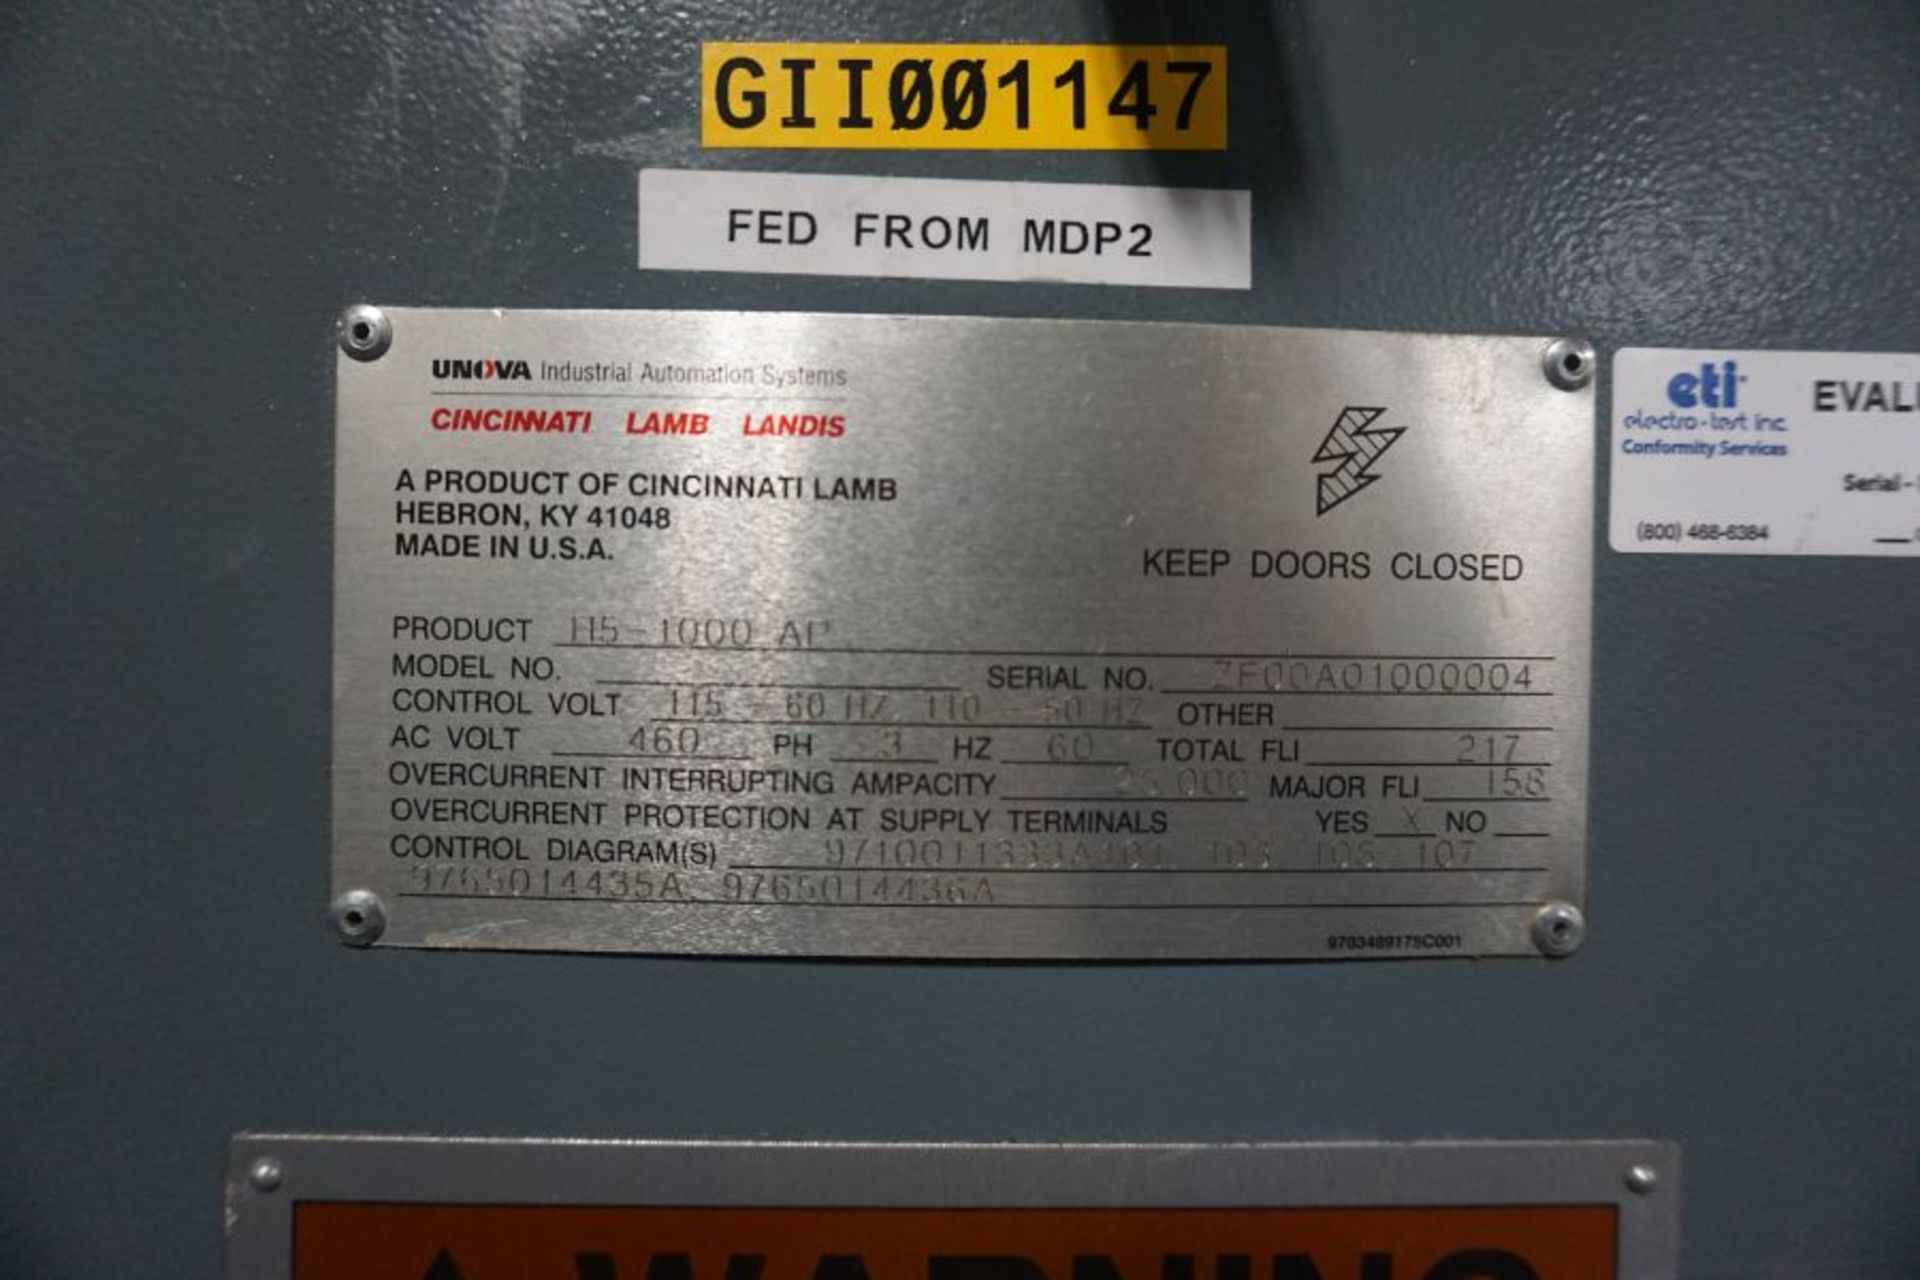 (2) Cincinnati Lamb H5-1000 AP F.M.S. Siemens 2100 5-Axis control , t (14)1250mm& 1000mm A.P.C, - Image 17 of 19